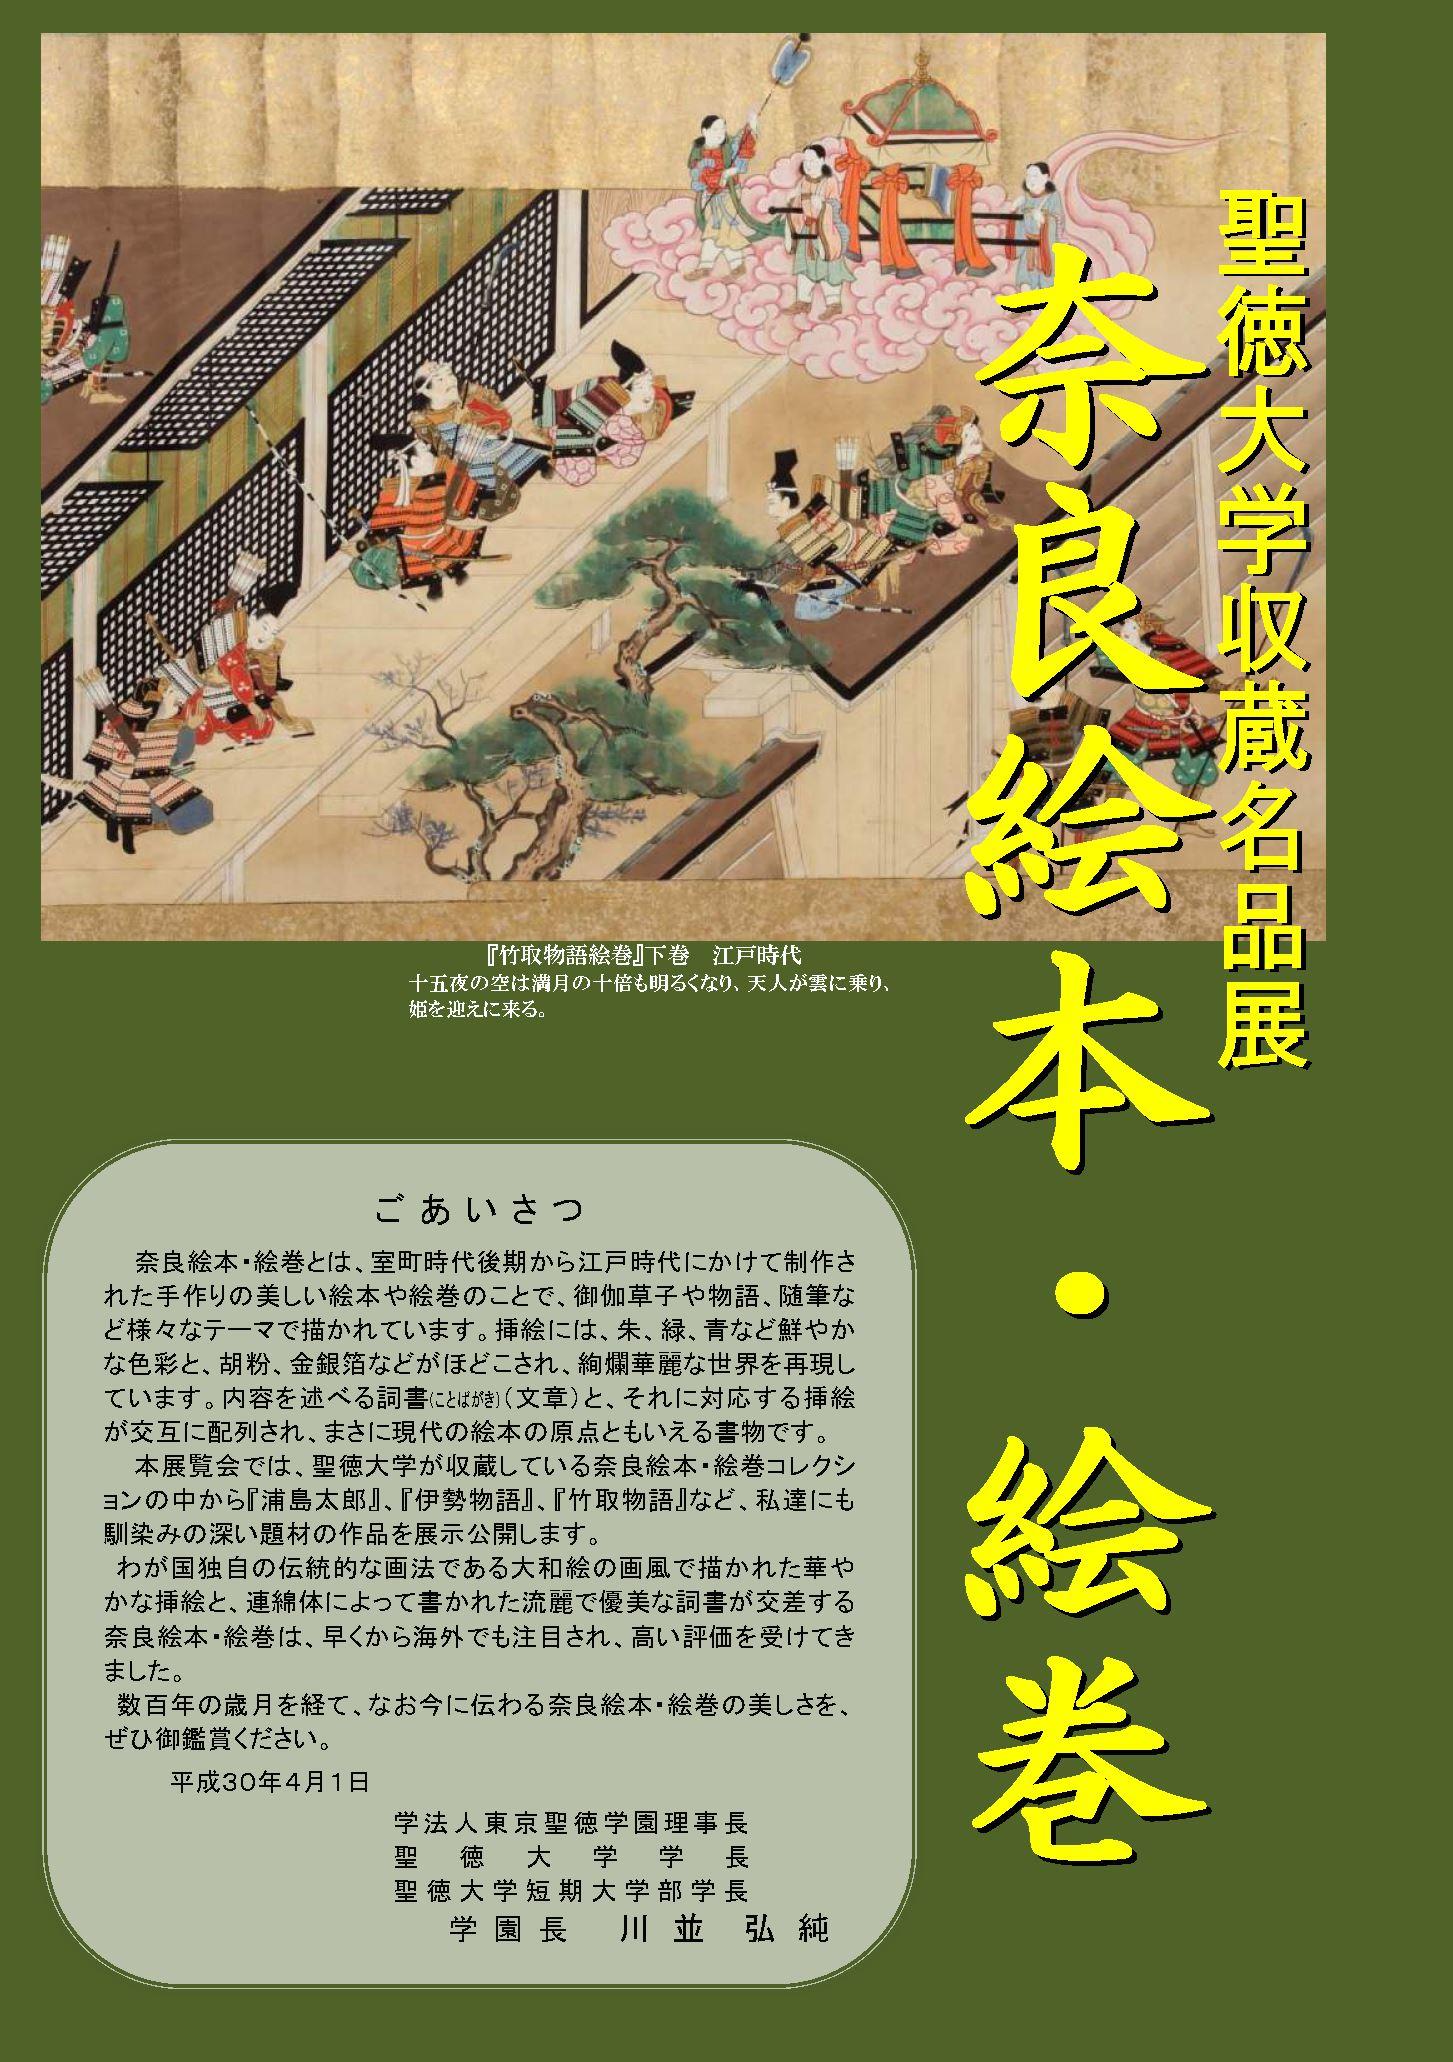 聖徳大学が収蔵名品展「奈良絵本・絵巻」を開催中 -- 『浦島太郎』『伊勢物語』『竹取物語』などを一般公開